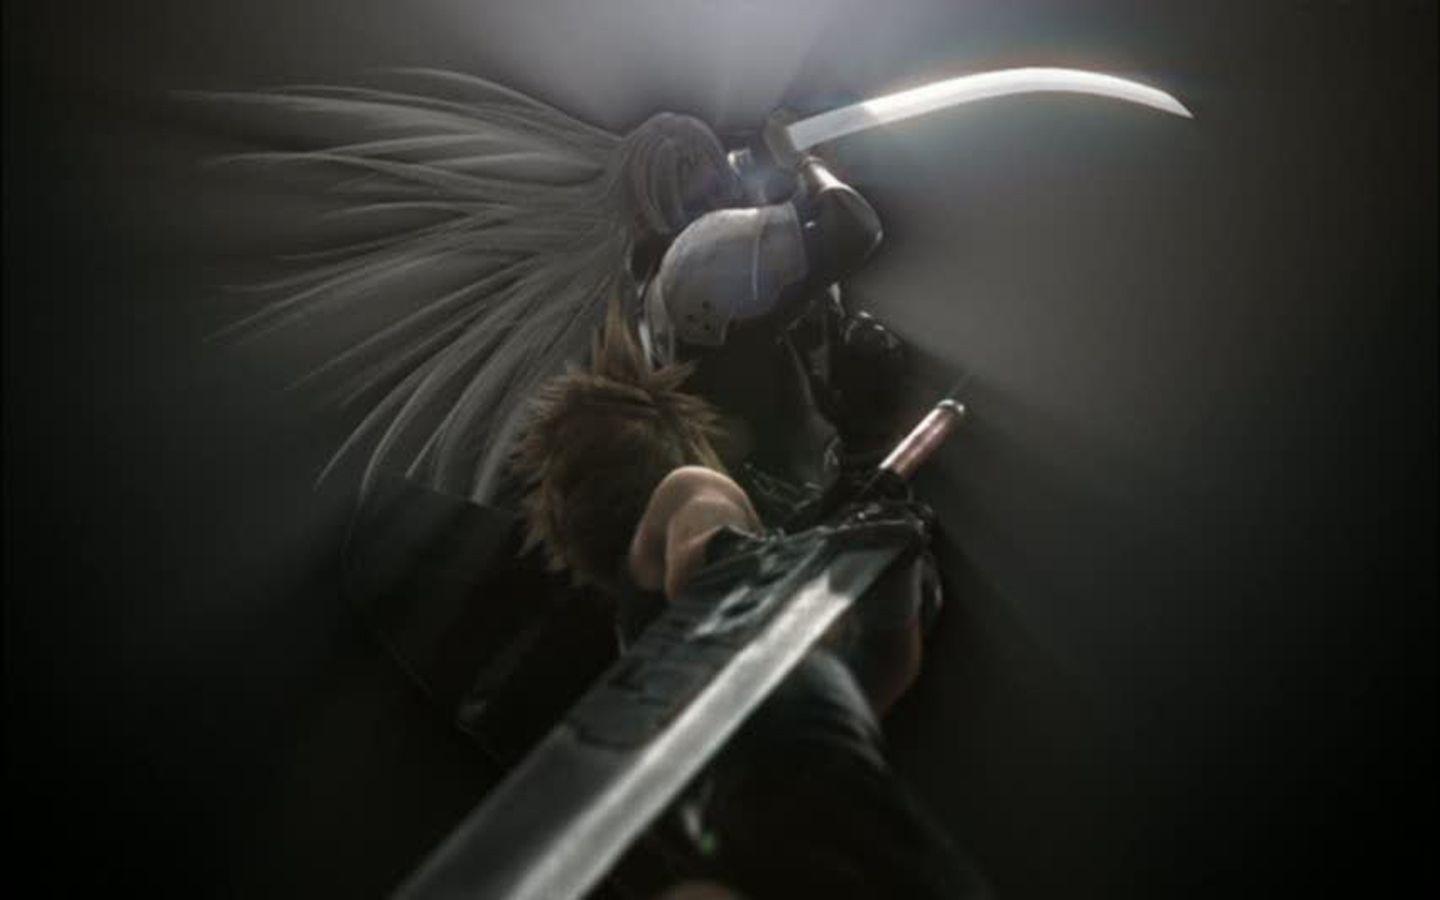 Final Fantasy 7 Sephiroth Wallpapers Hd Wallpaper Cave